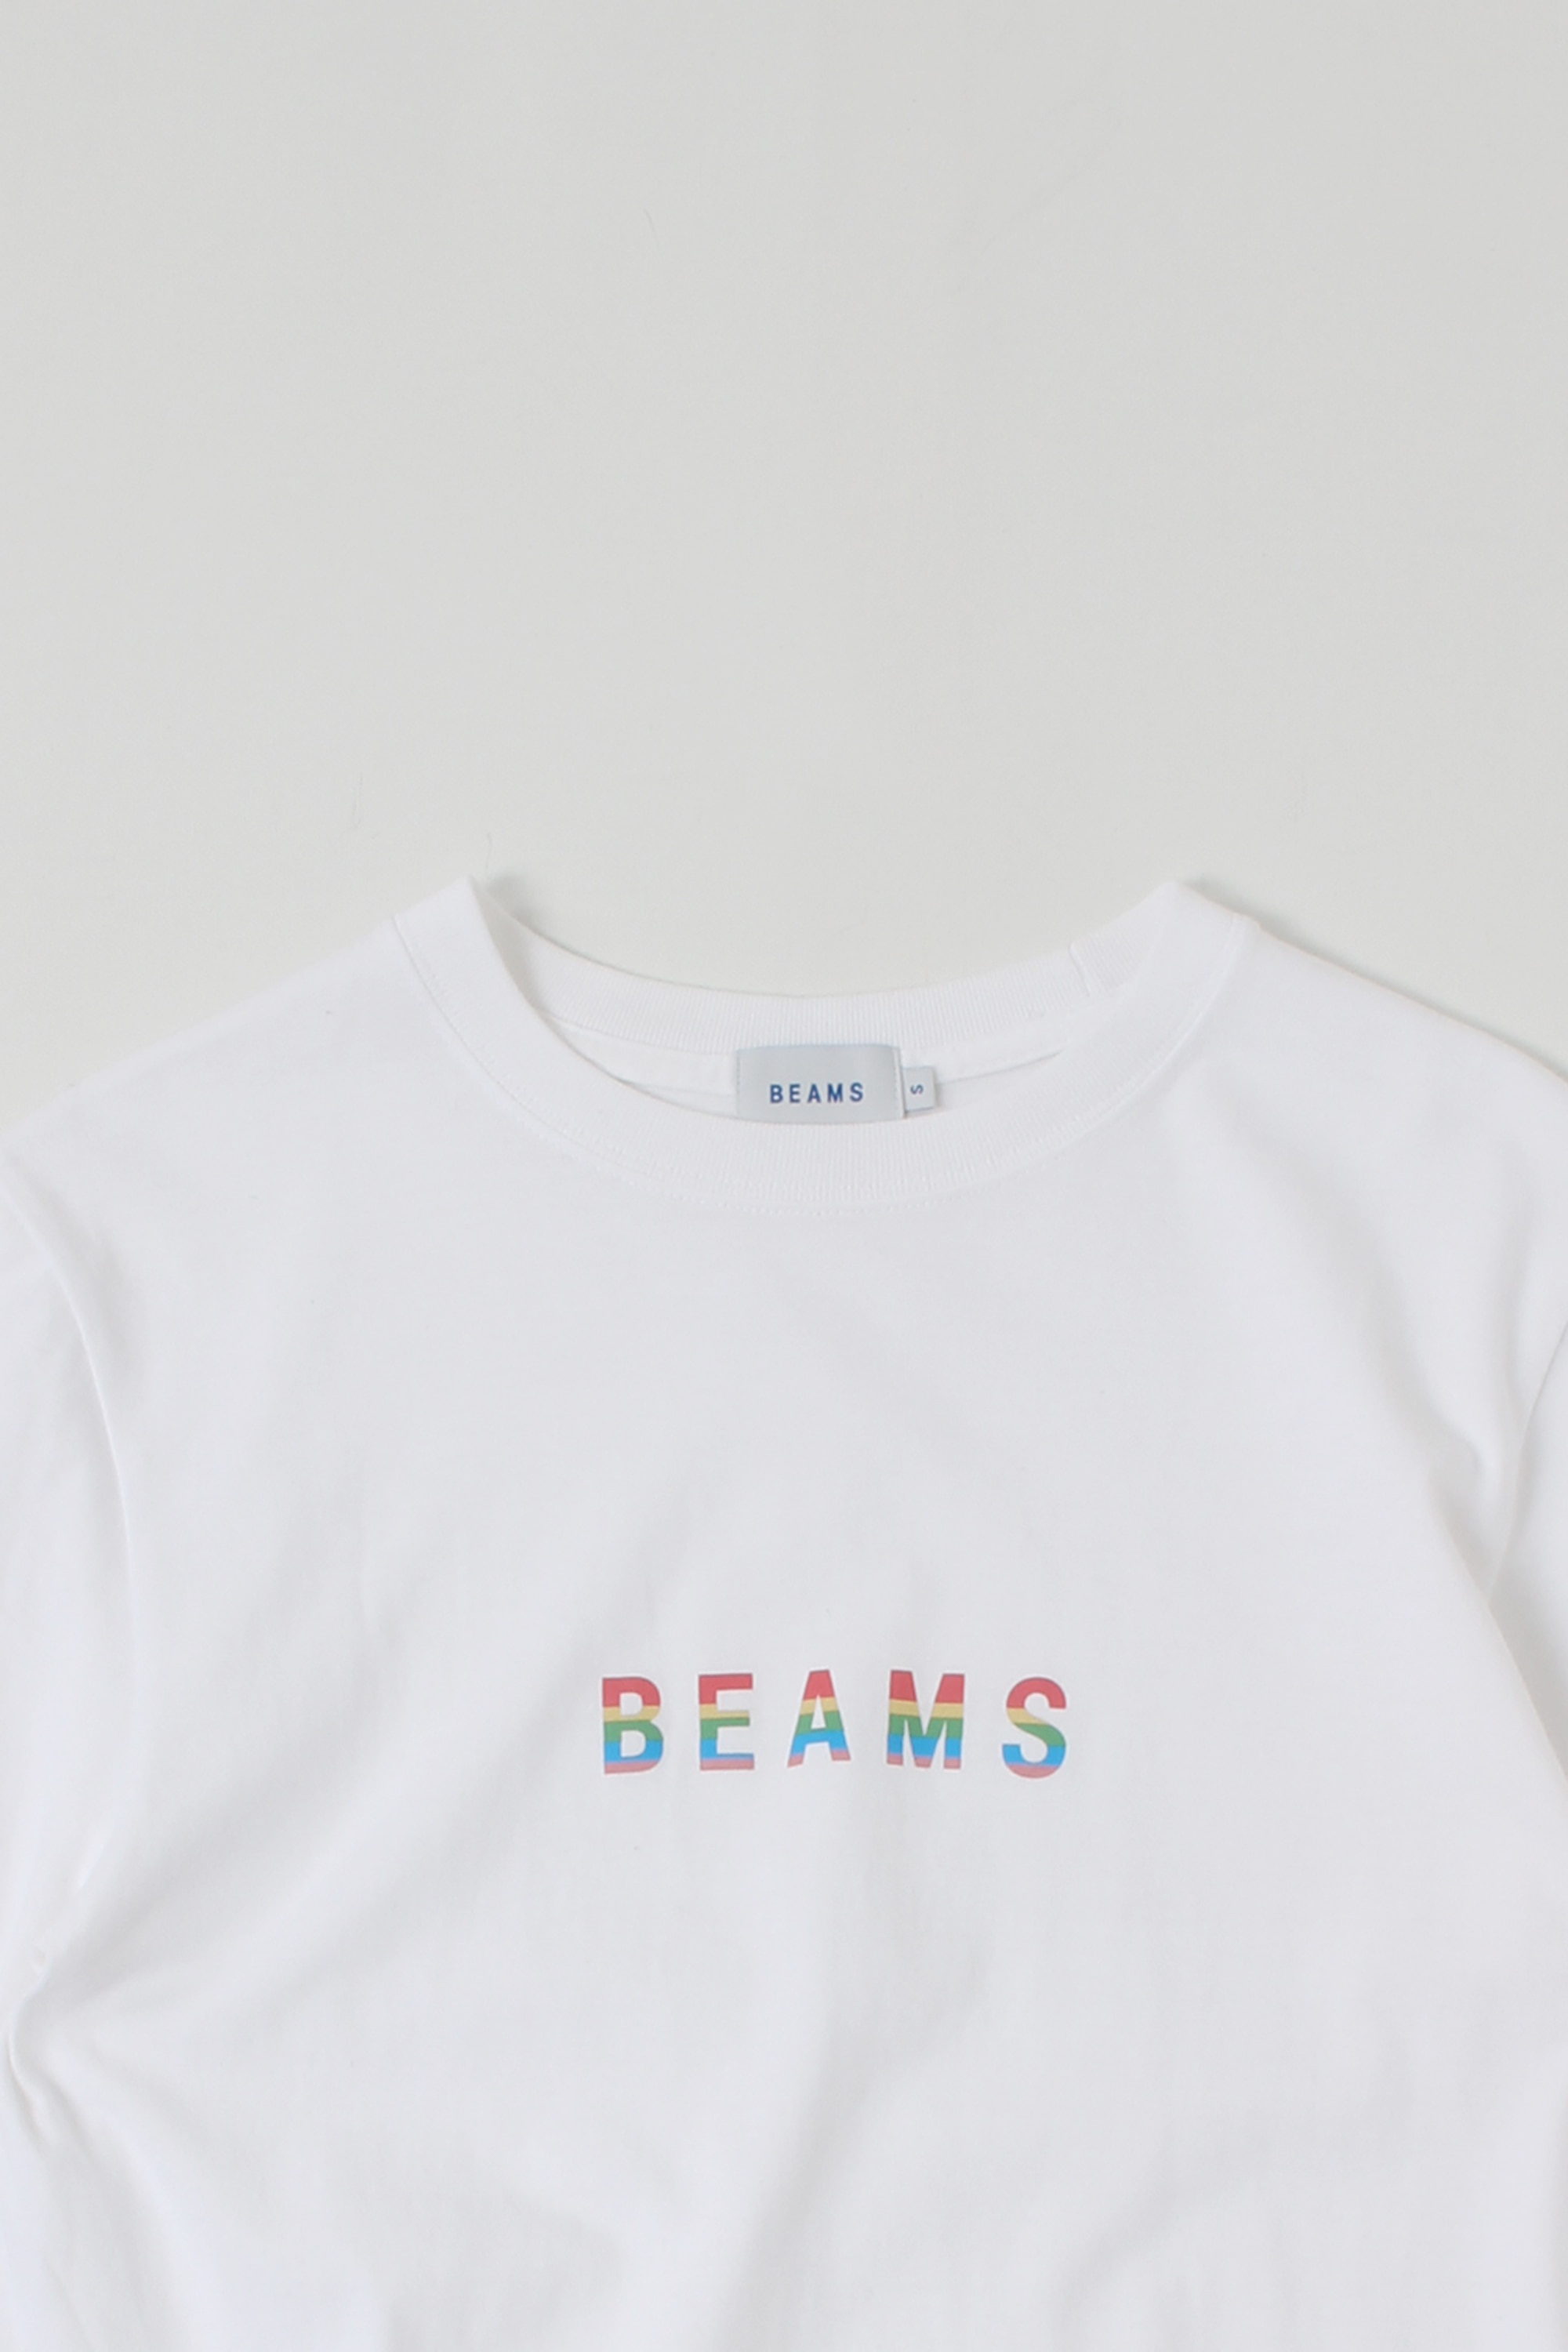 BEAMS Logo Short sleeve(S)